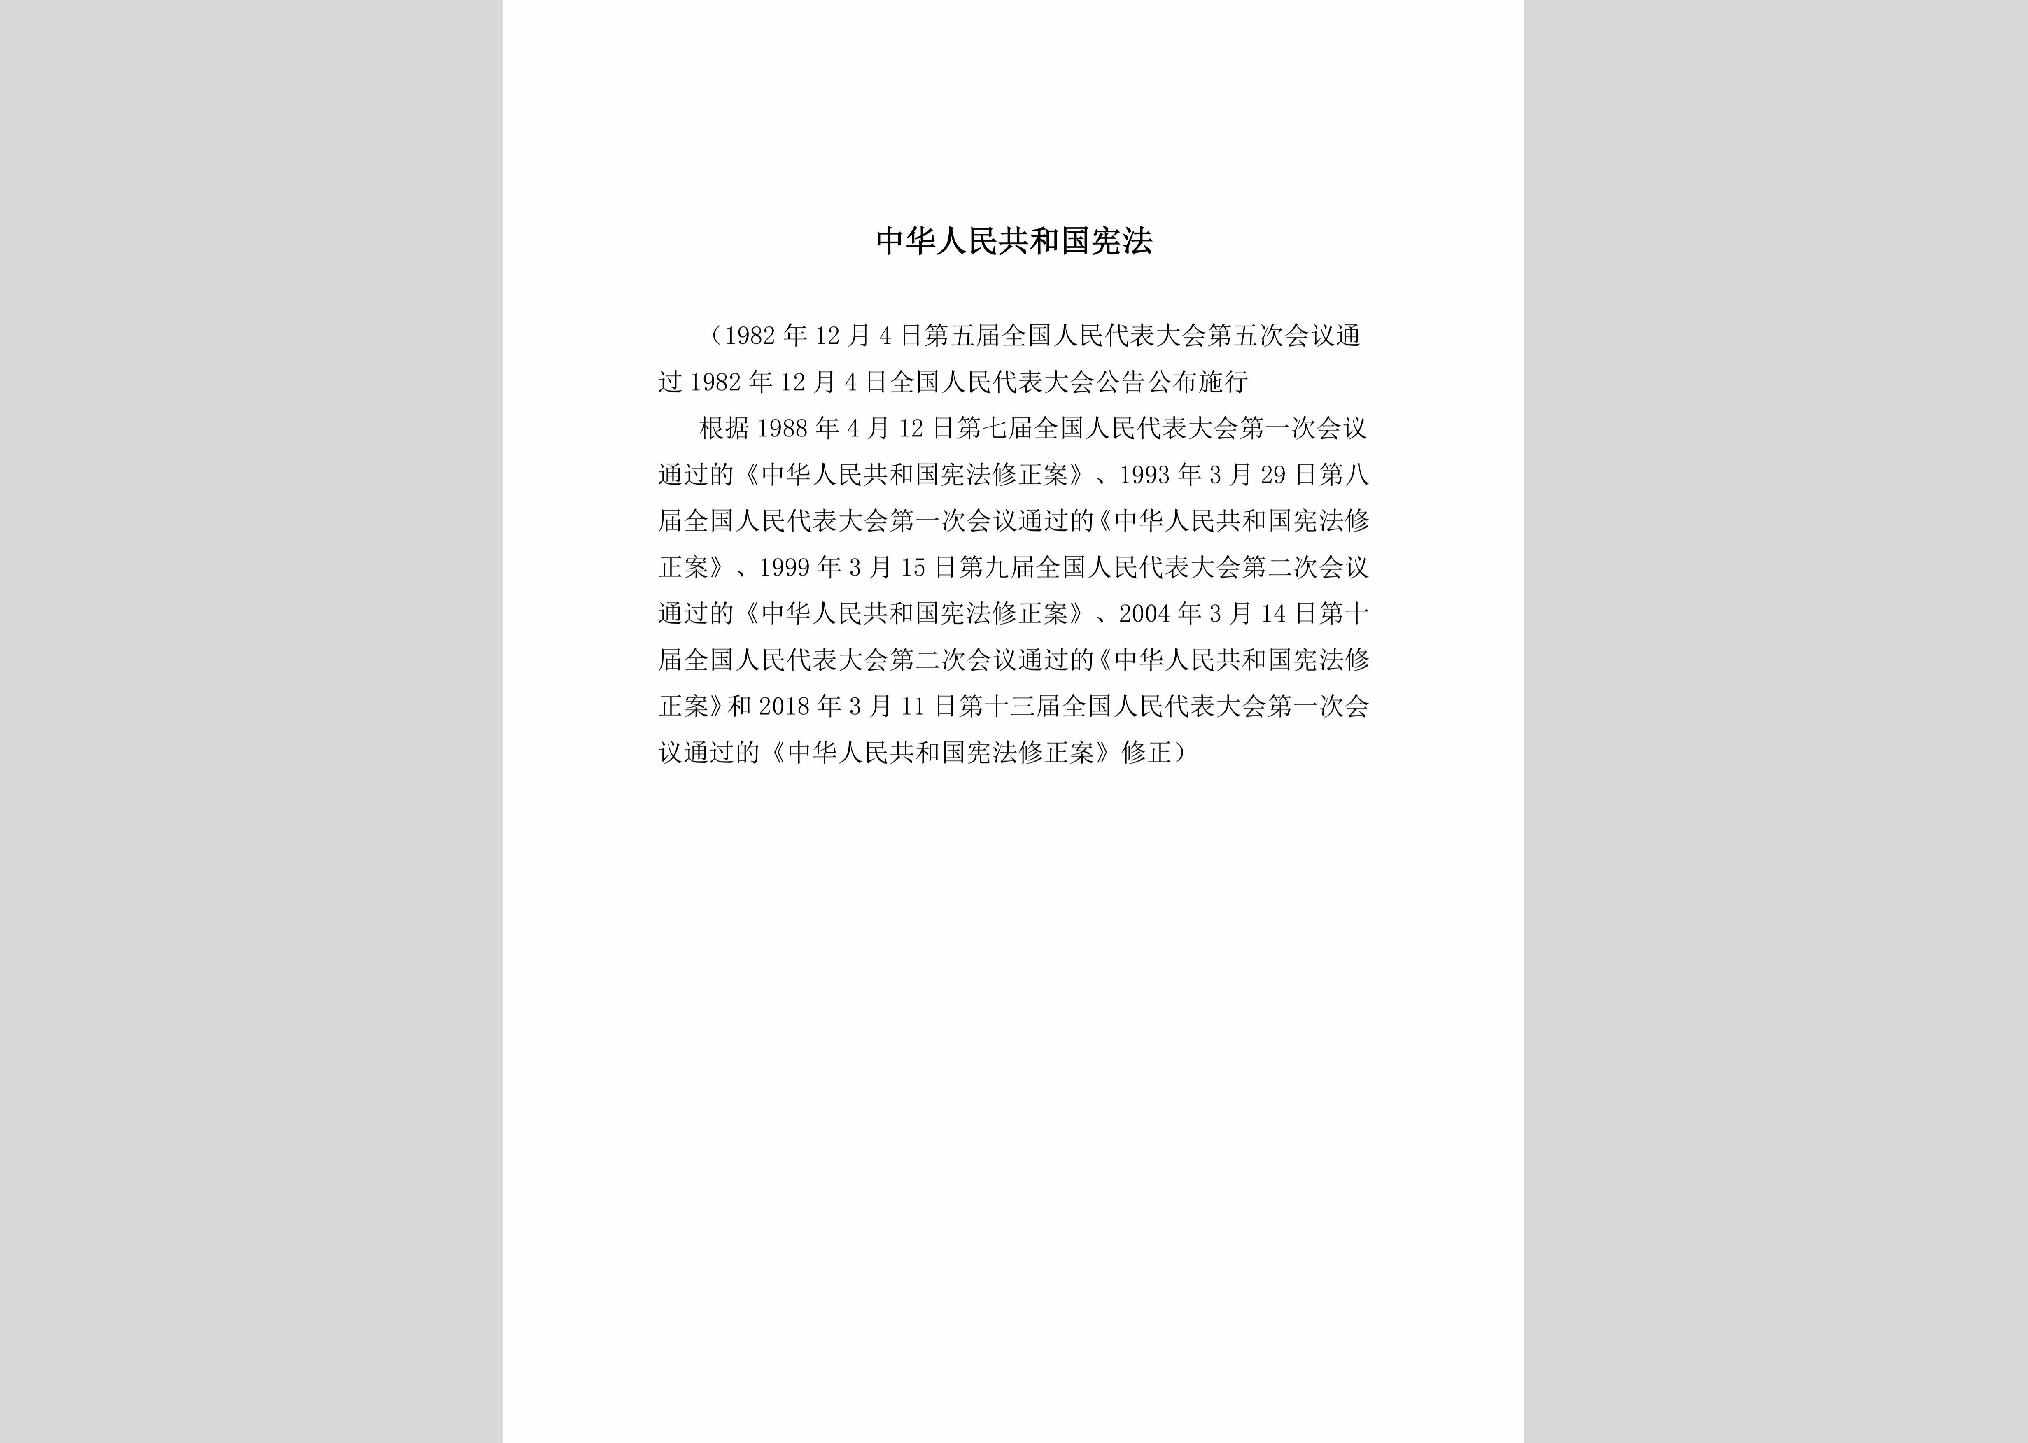 ZHRMGHGX：中华人民共和国宪法